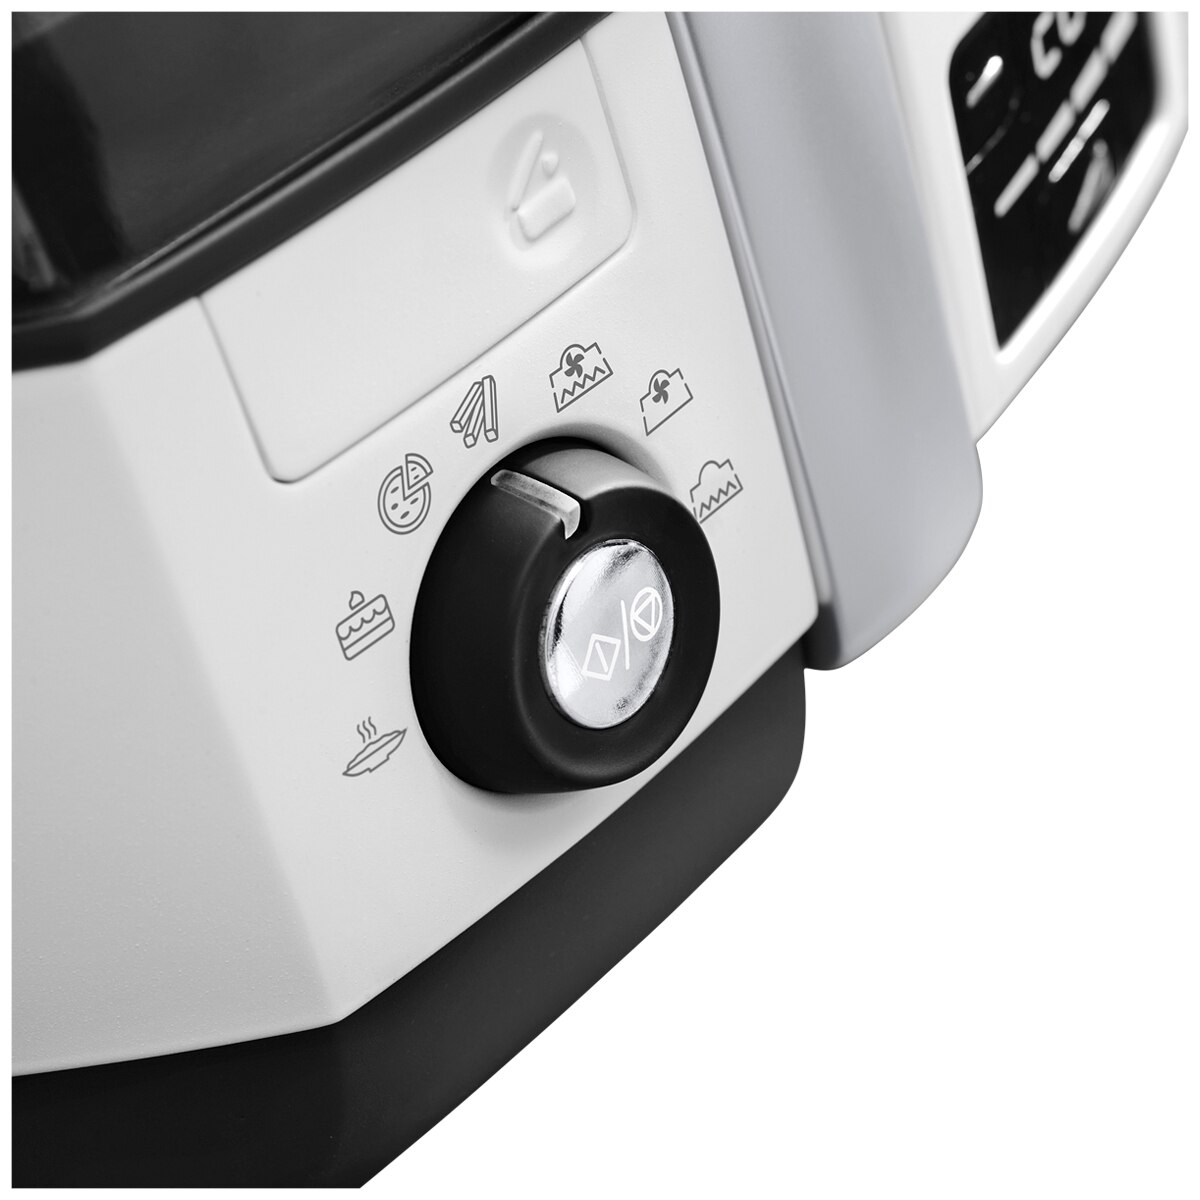 Delonghi Multicuisine Cooker Air Fryer FH1394